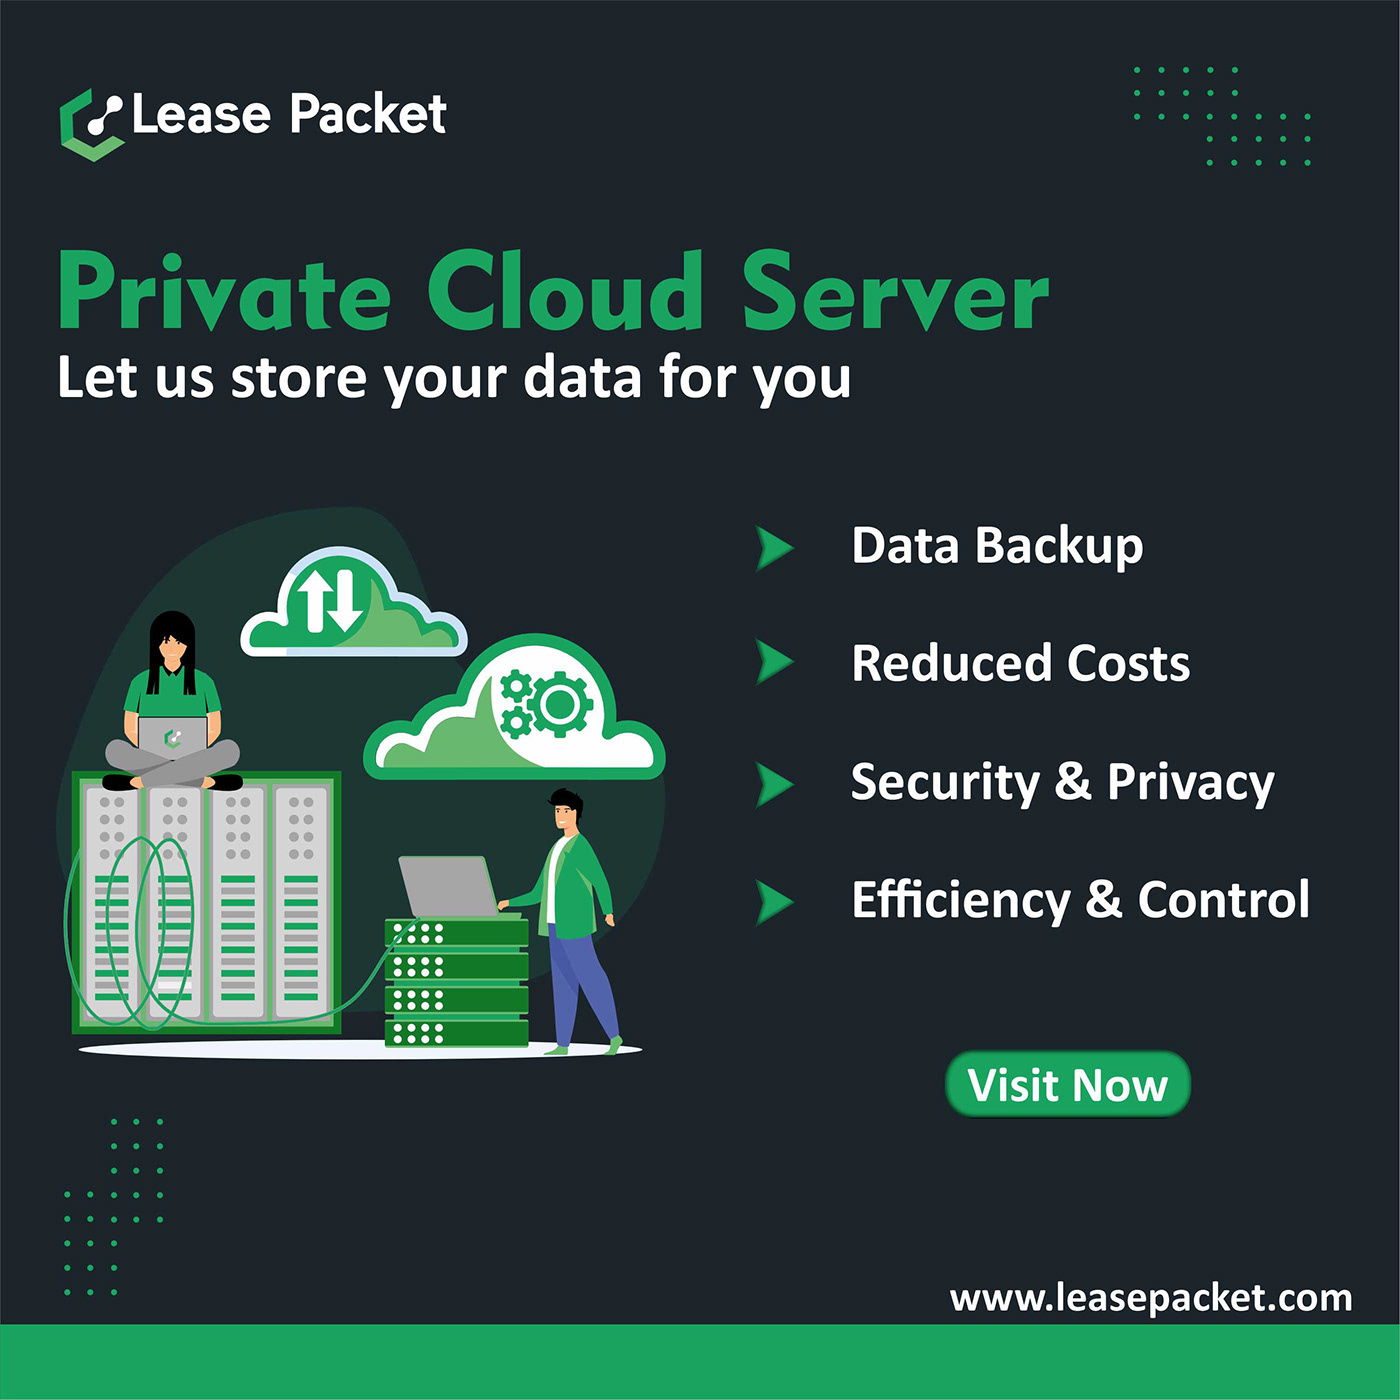 #leasepacket #cloud #cloudserve #privatecloud #privatecloudserver #server #serverprovider #serversolutions cloudcomputing